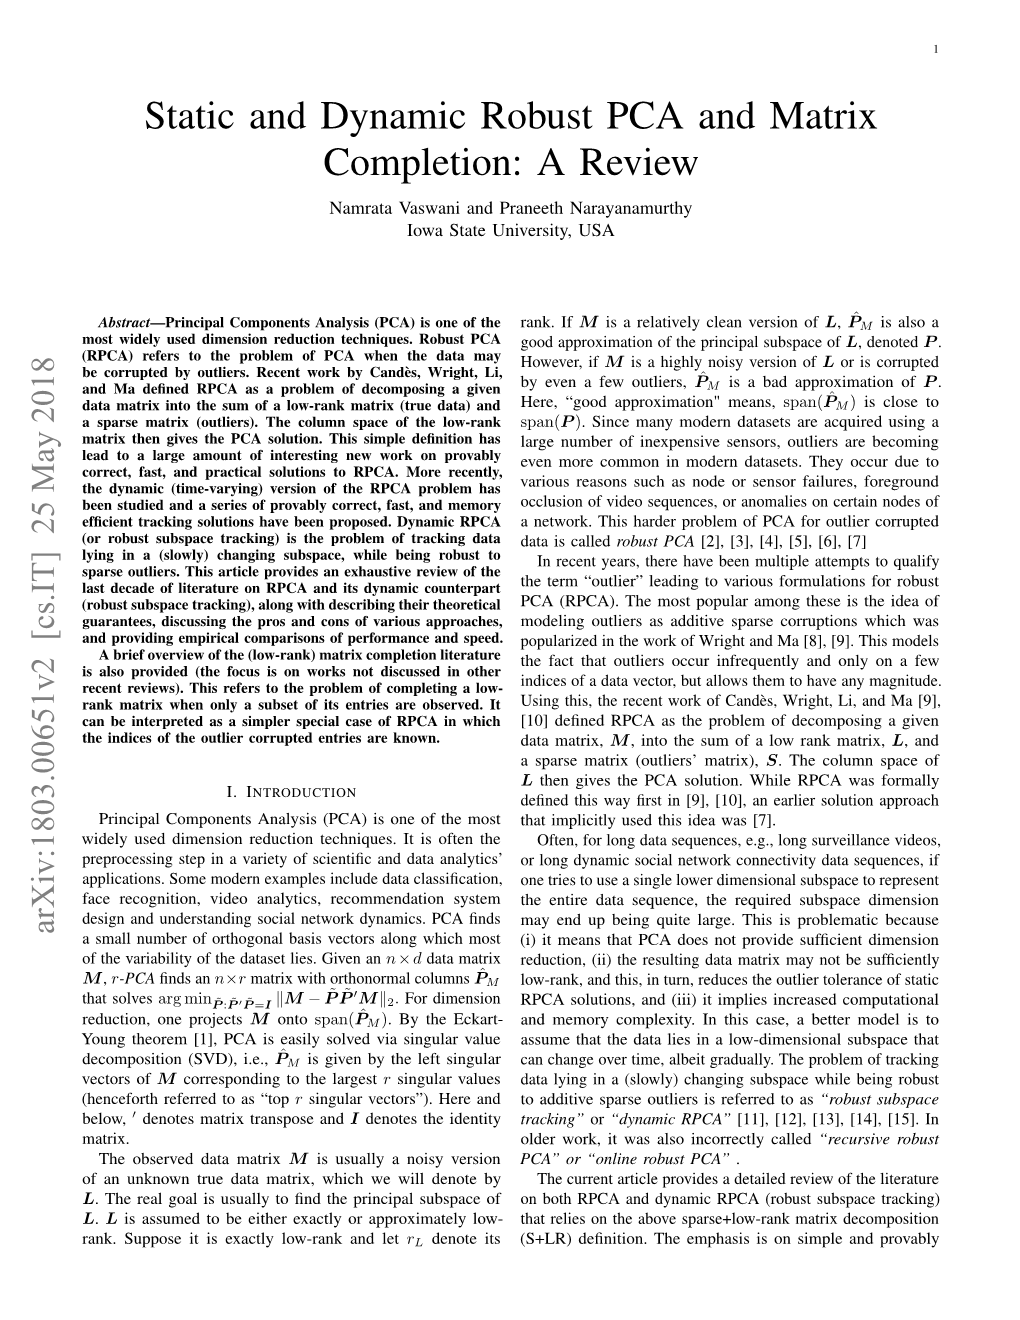 Static and Dynamic Robust PCA and Matrix Completion: a Review Namrata Vaswani and Praneeth Narayanamurthy Iowa State University, USA